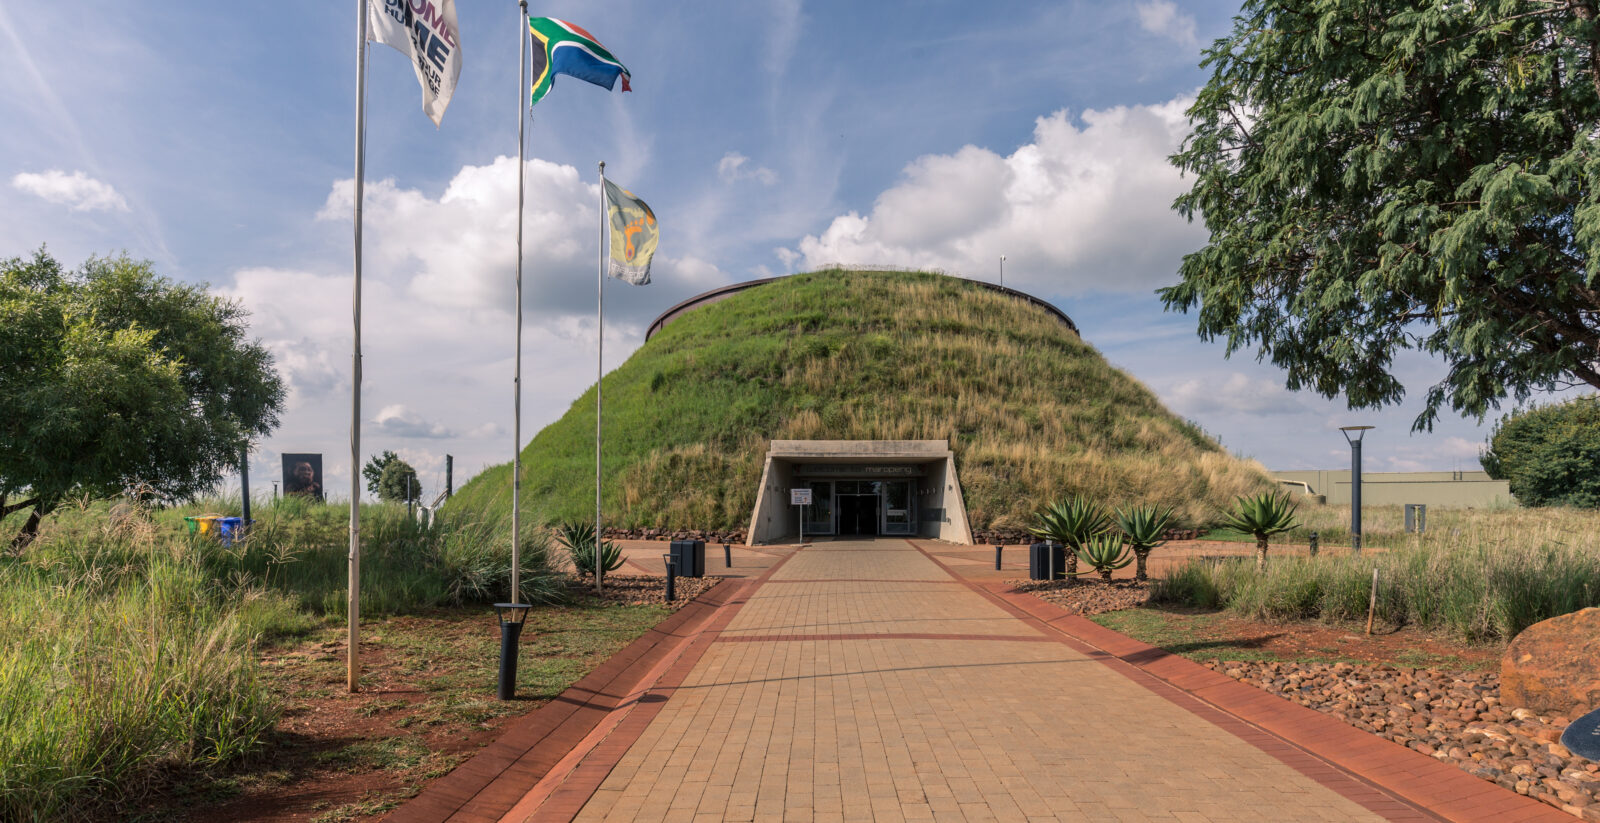 Maropeng Besucherzentrum im Craddle of Human Kind in Südafrika